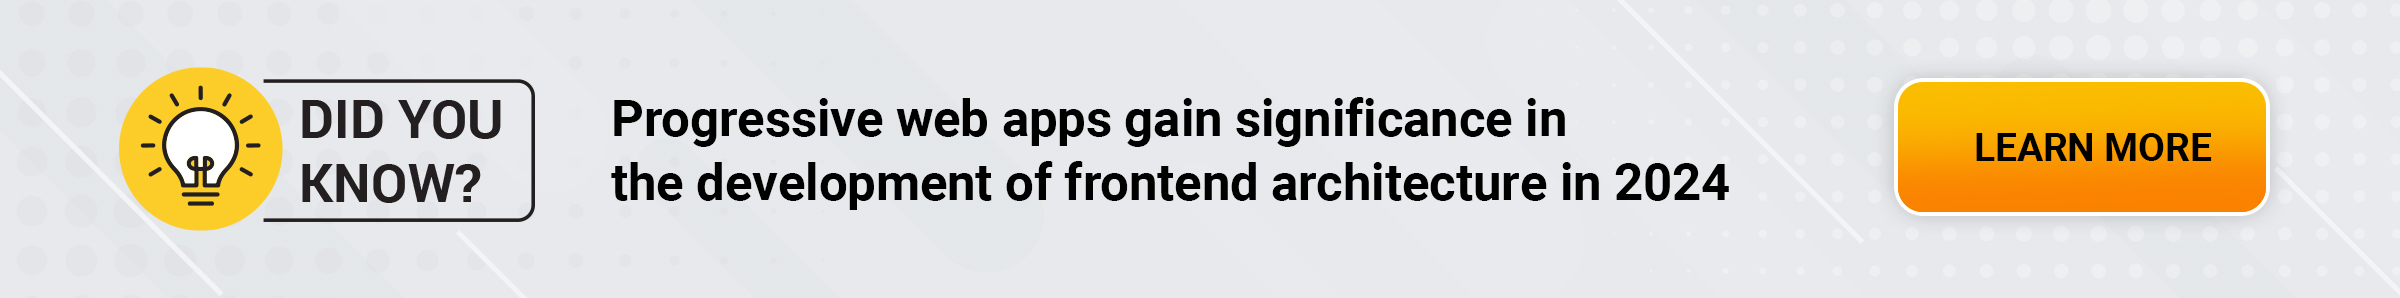 Progressive web apps gain significance in the development of frontend architecture in 2024